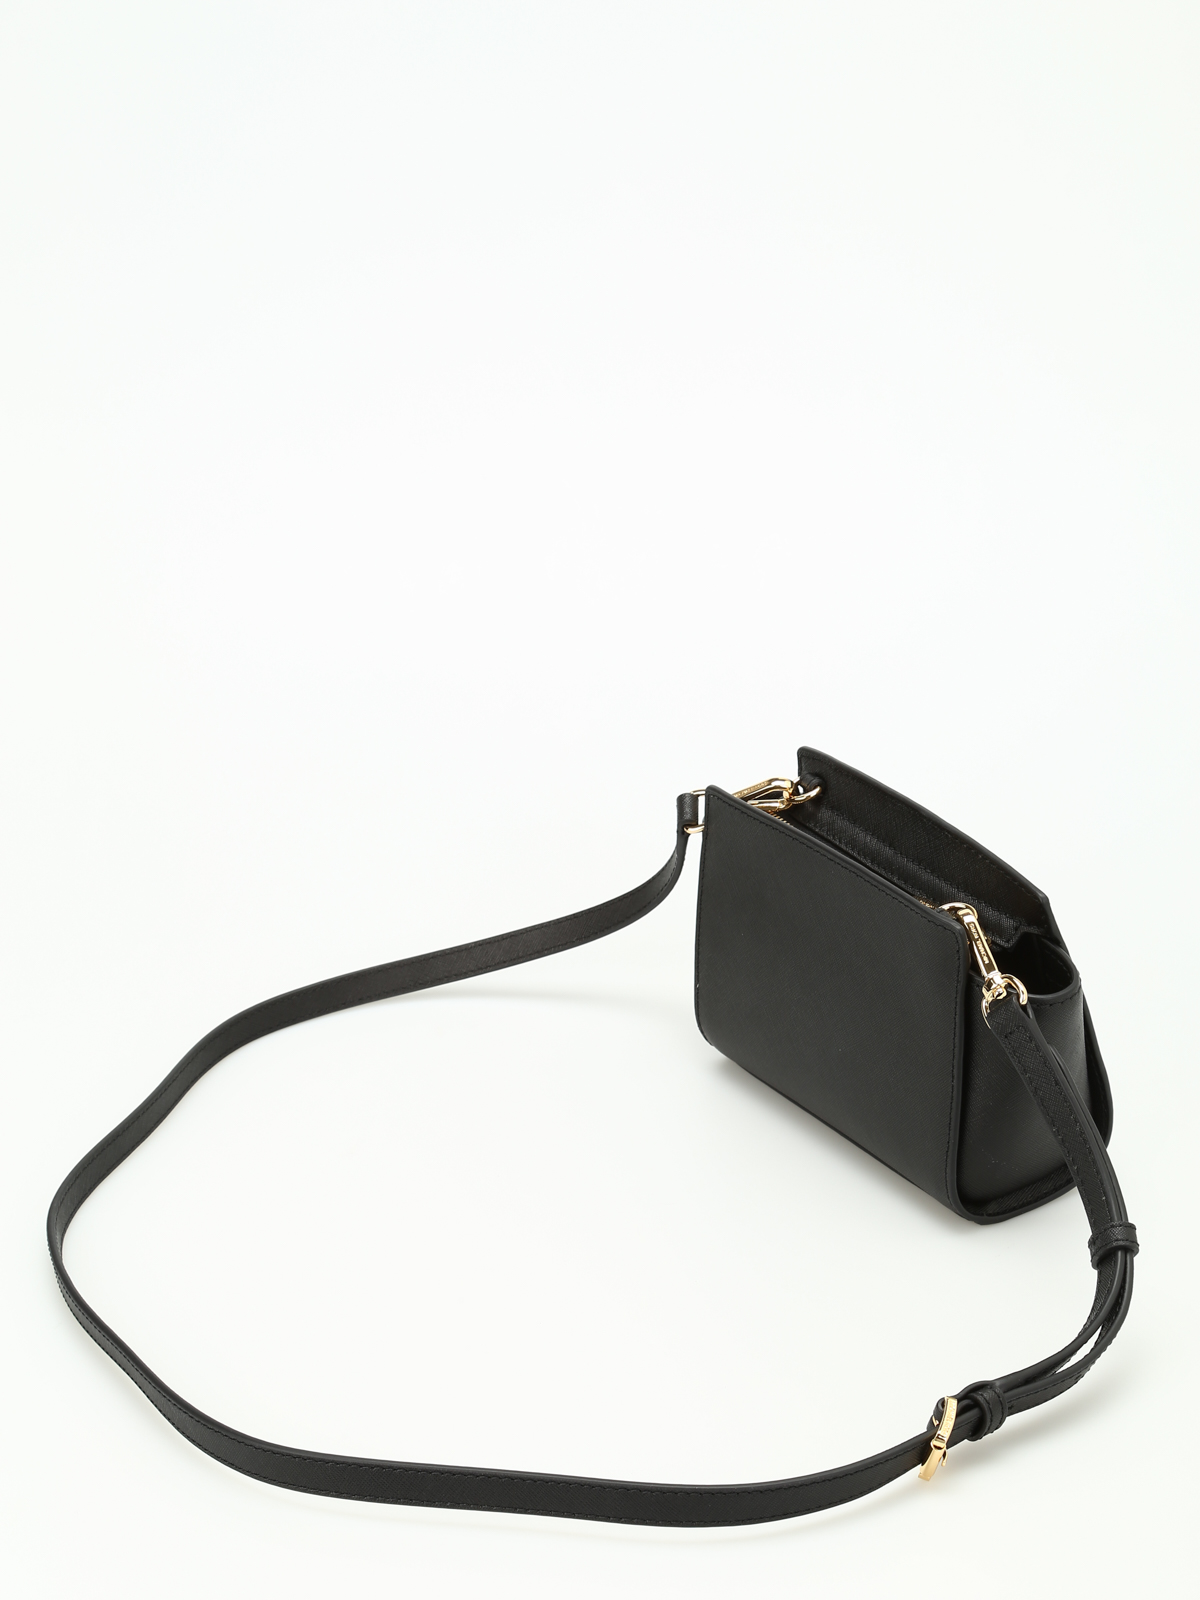 Michael Kors - Authenticated Selma Handbag - Leather Black Plain for Women, Very Good Condition